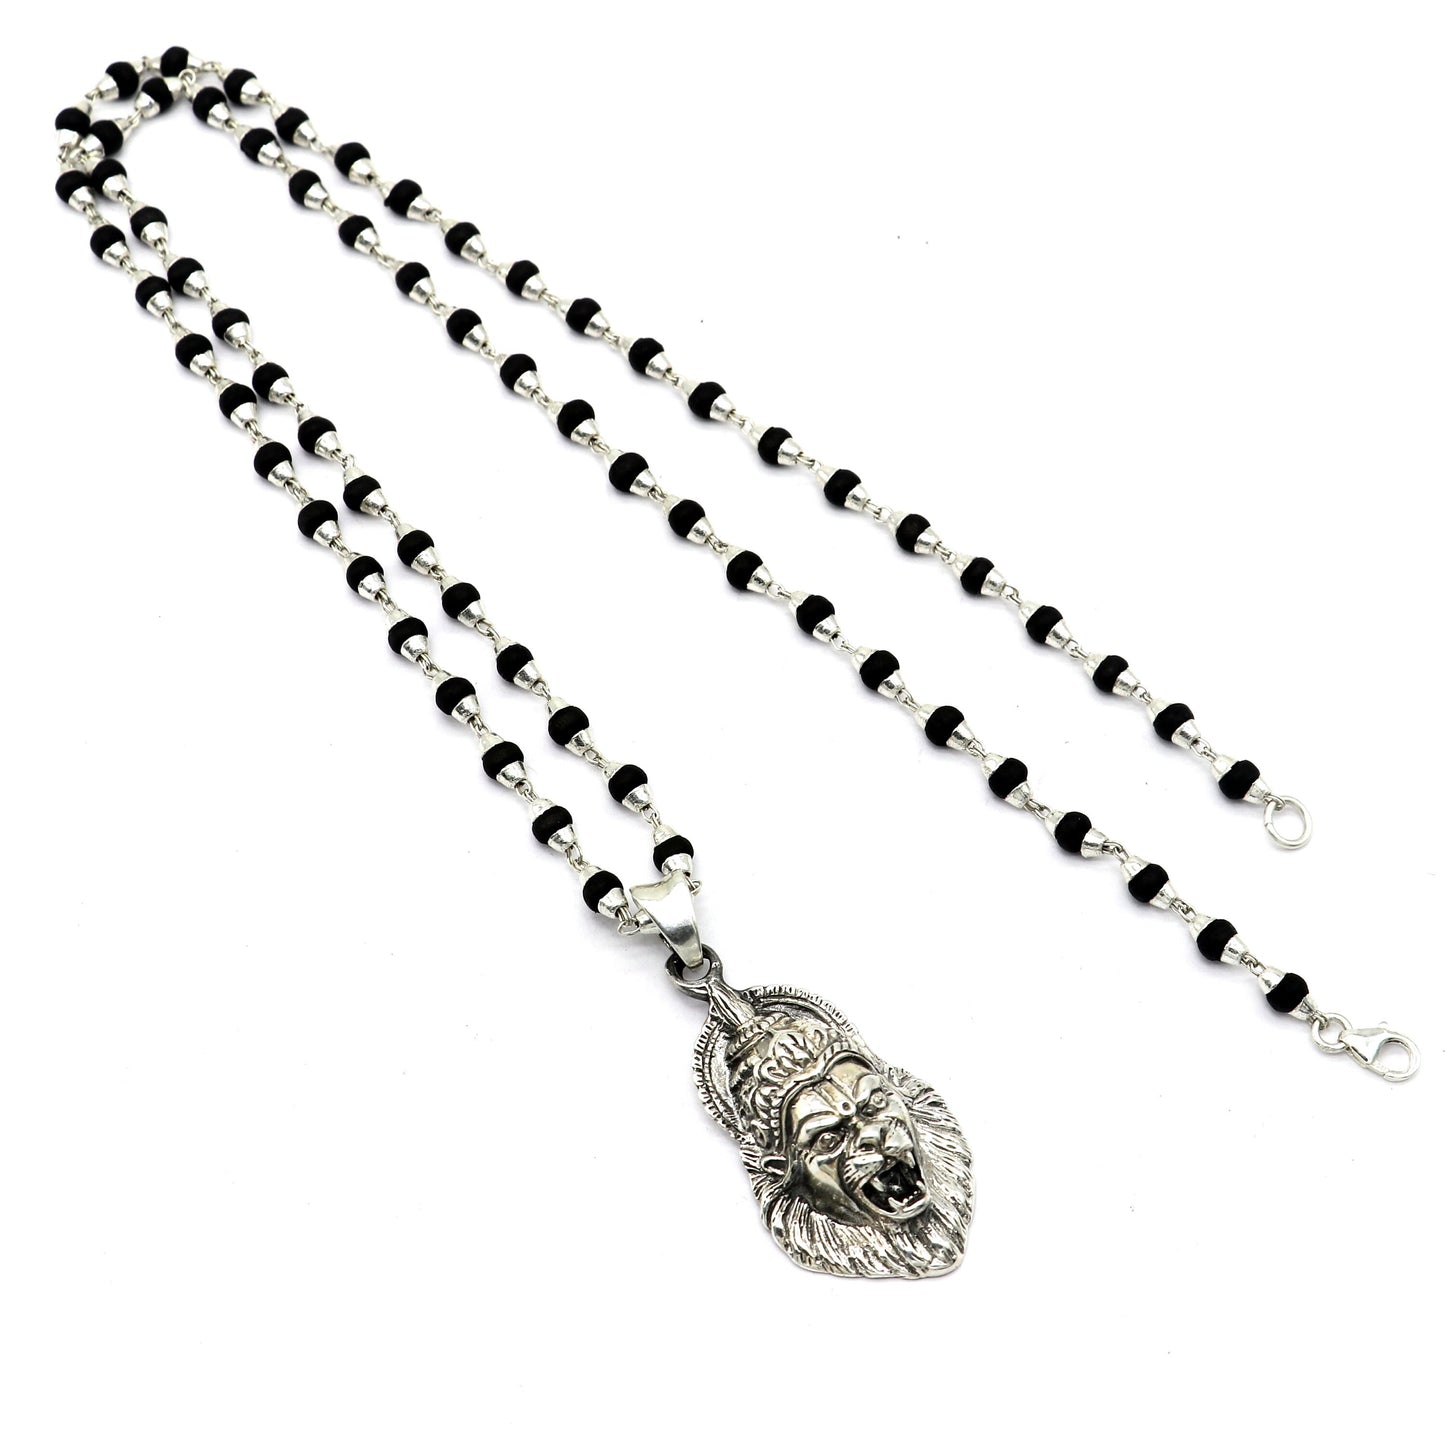 Vintage 925 Sterling silver Lord Vishnu avatar Narsimha pendant with Black and white rosary beads (tulsi mala) meditation necklace set677 - TRIBAL ORNAMENTS